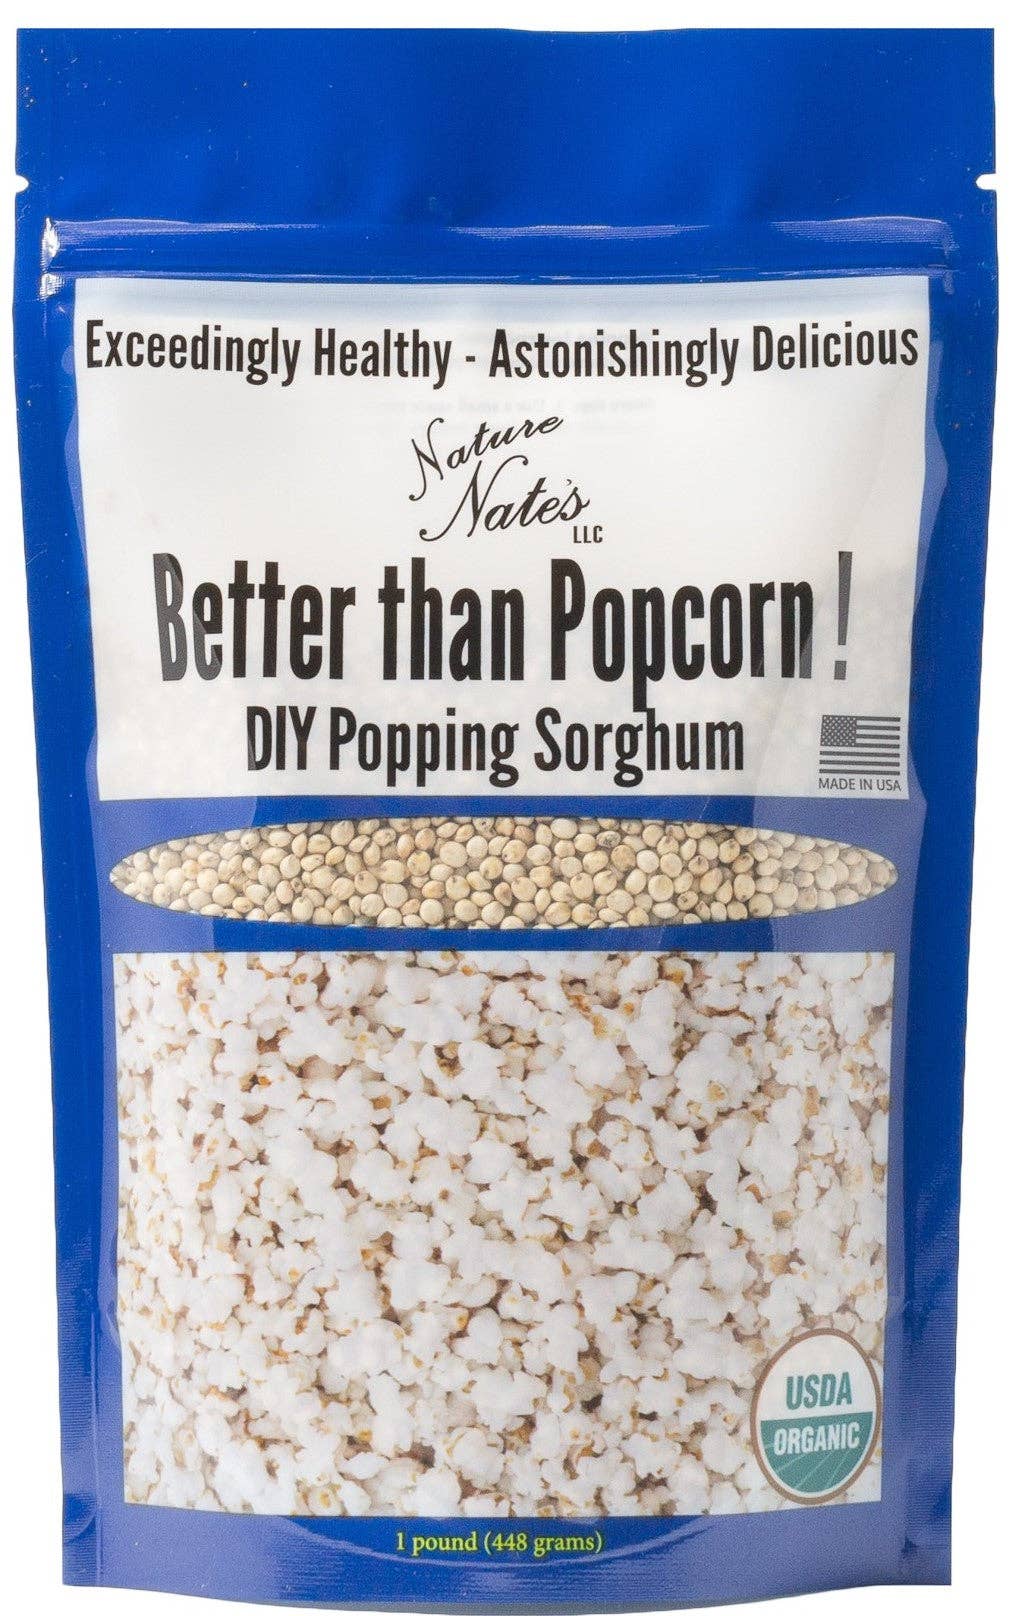 Organic Popping Sorghum, DIY Do It Yourself - 1 lb